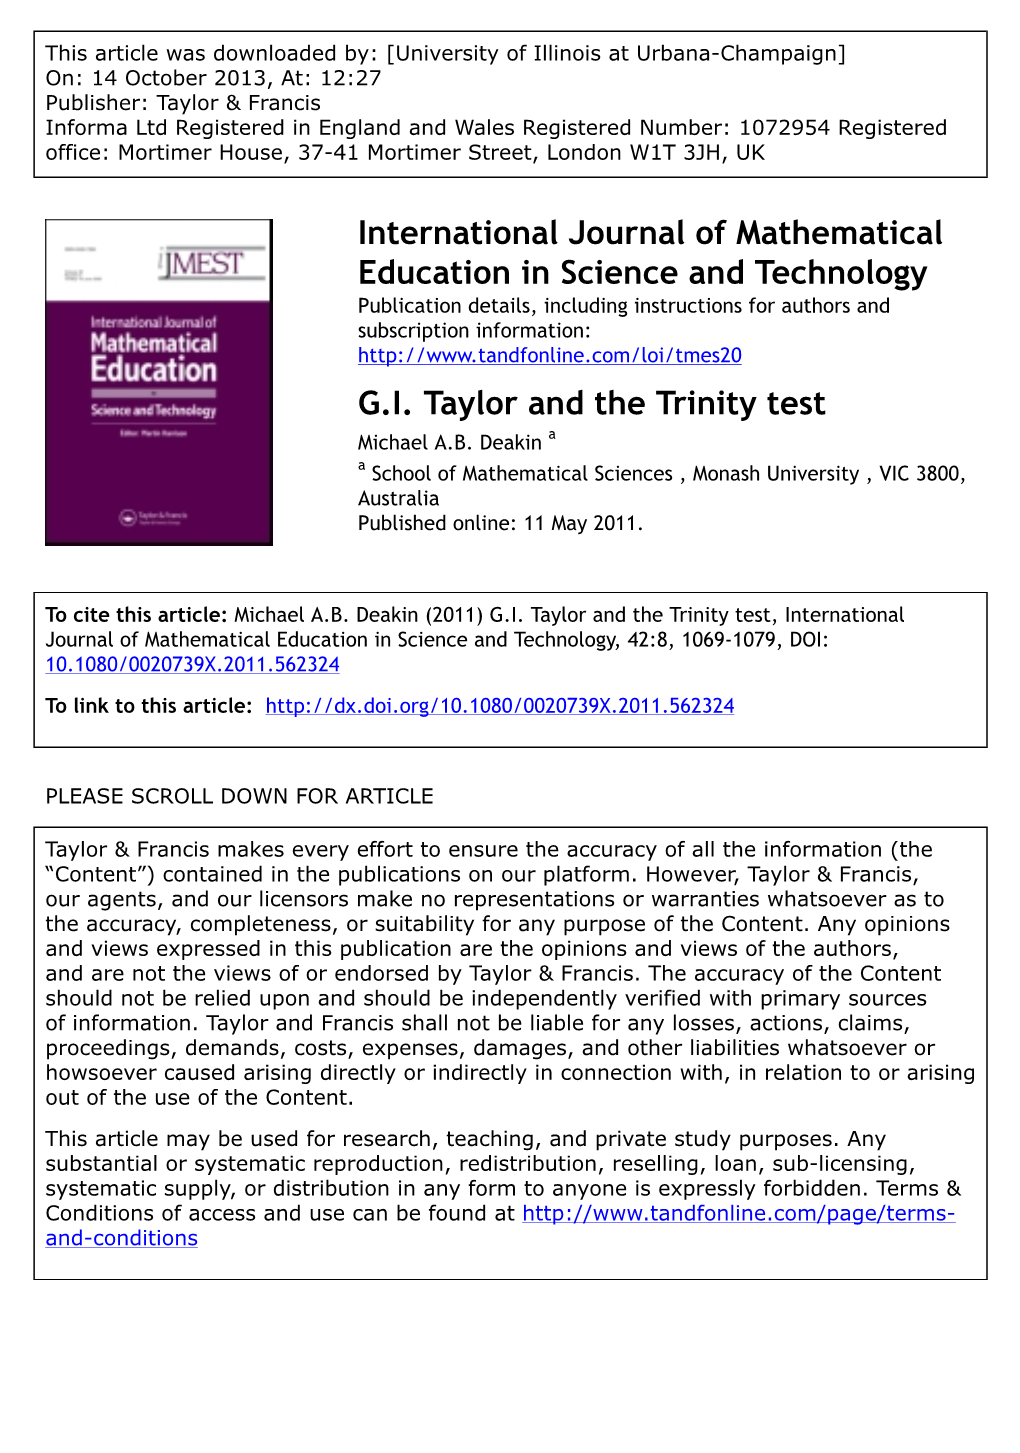 GI Taylor and the Trinity Test